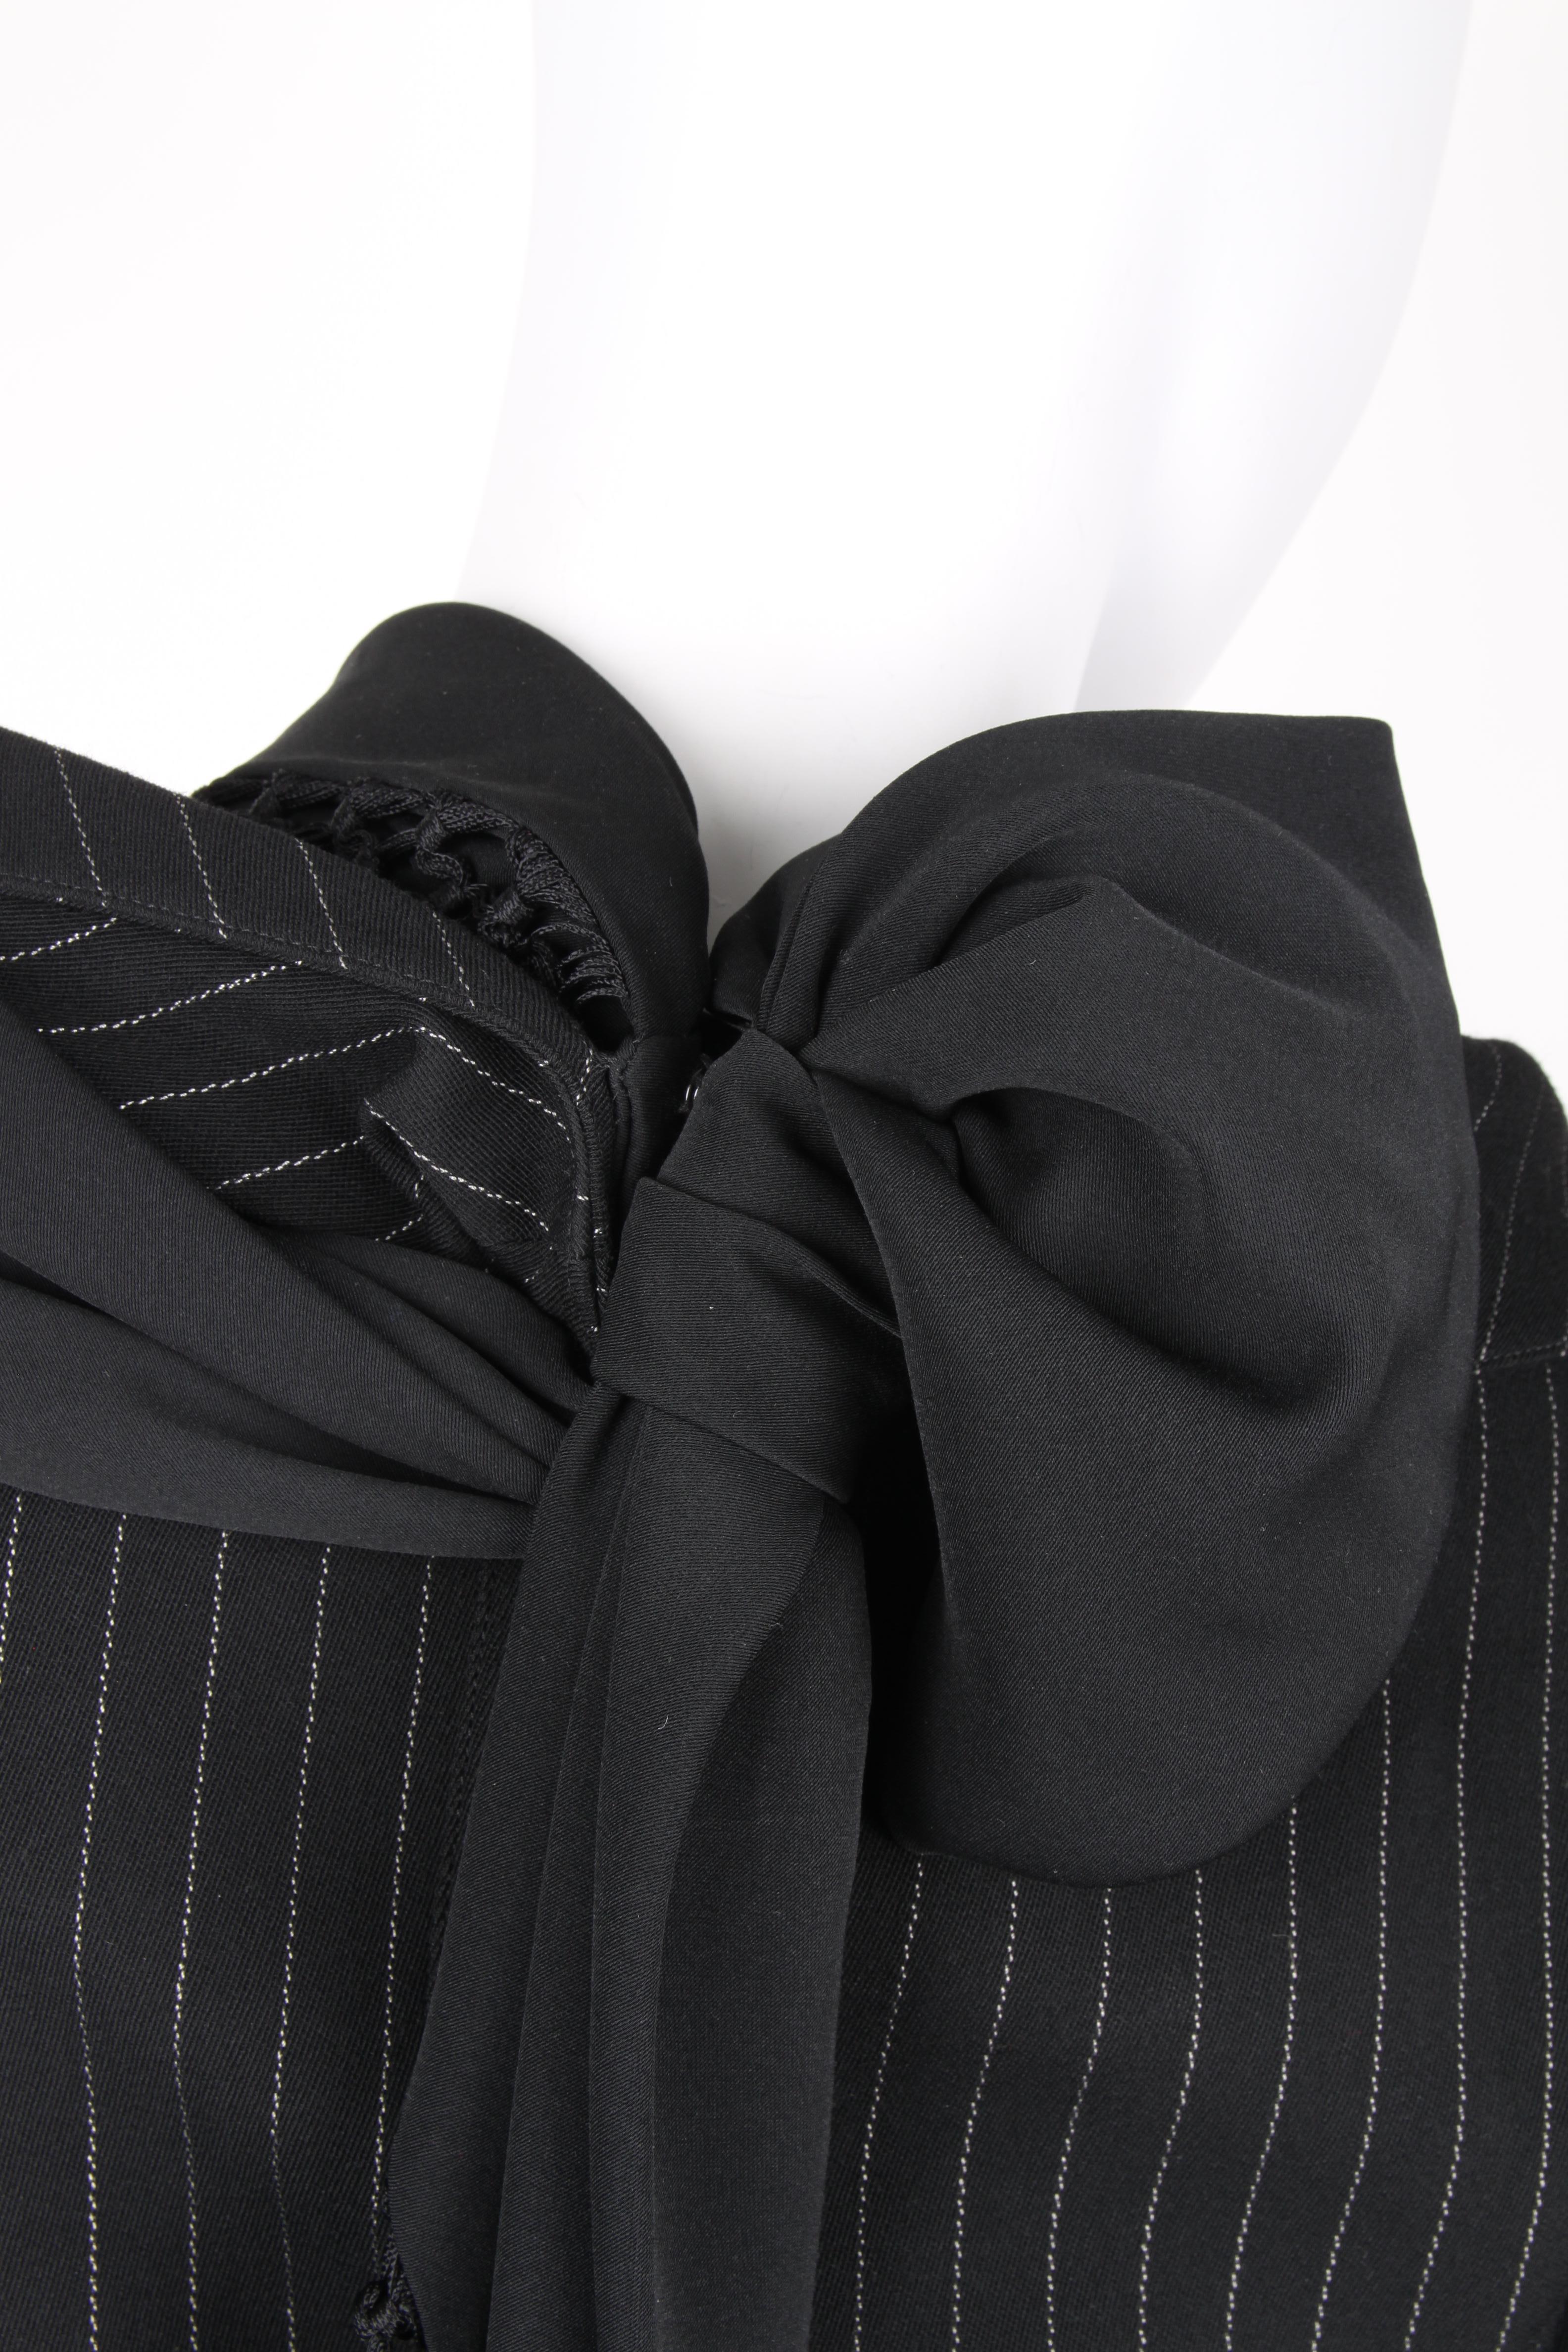 Thierry Mugler pinstripe jacket with asymmetric silk tassle shawl For Sale 2